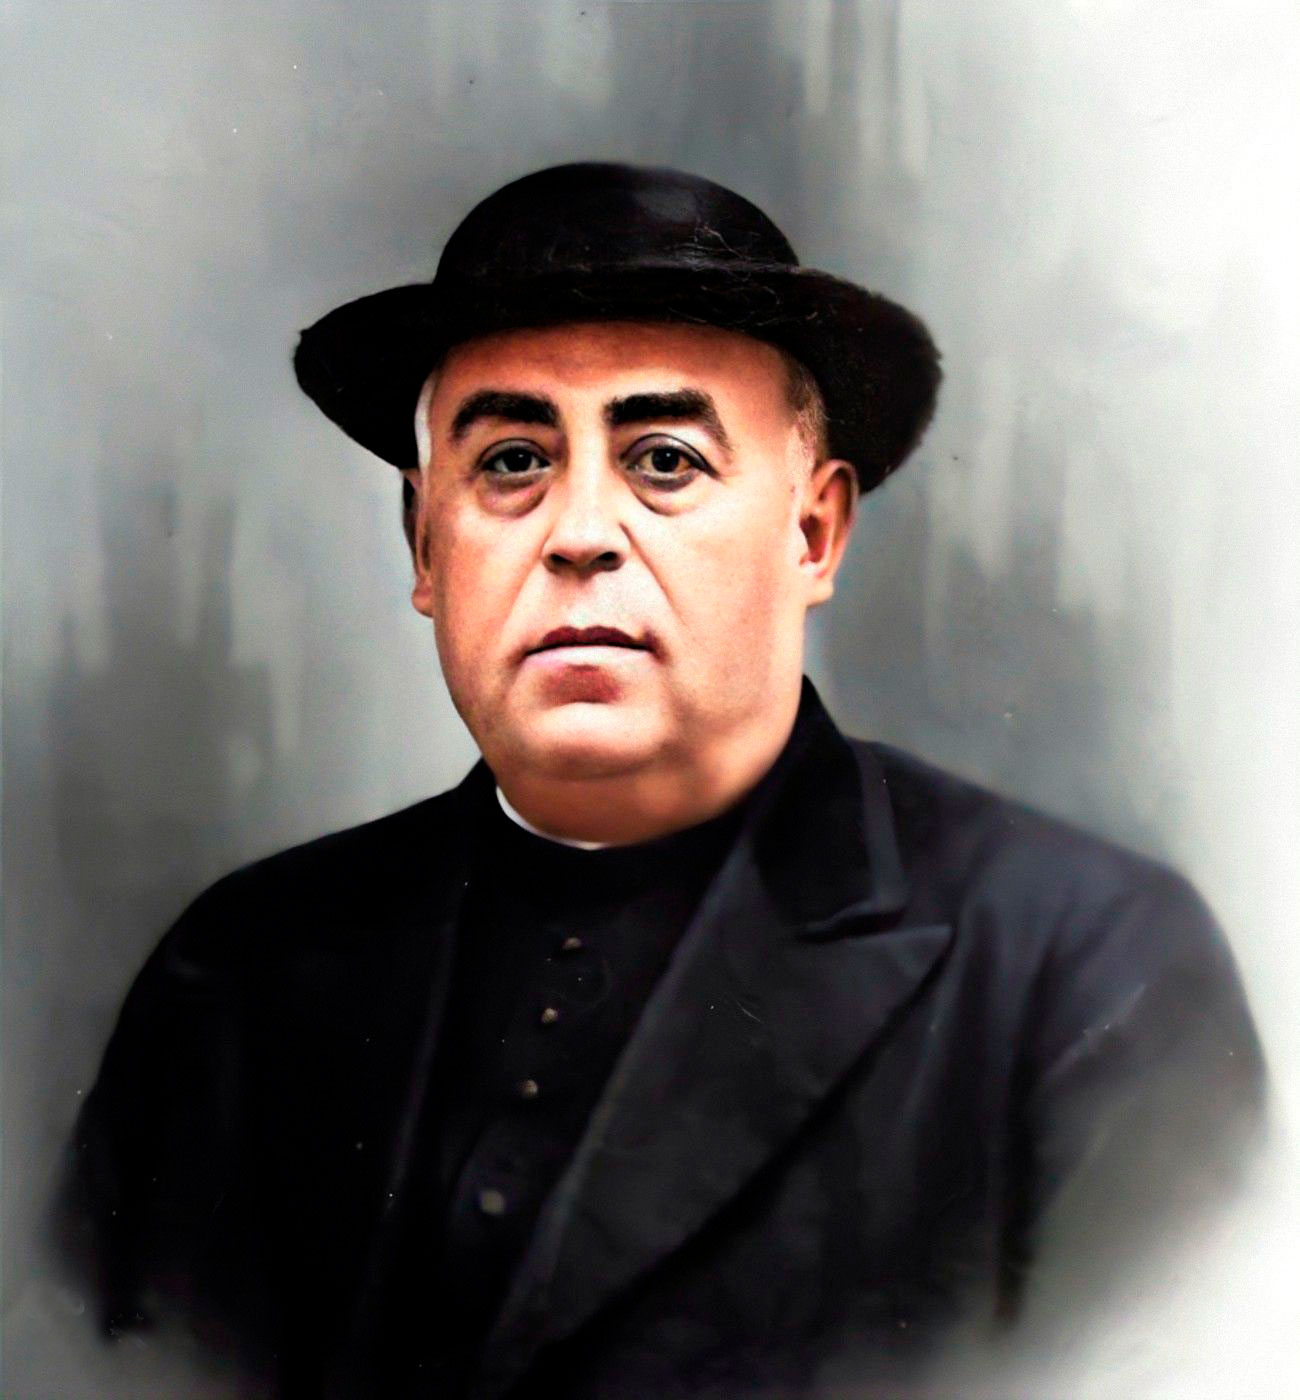 Juan Benito Martínez-Soriano López